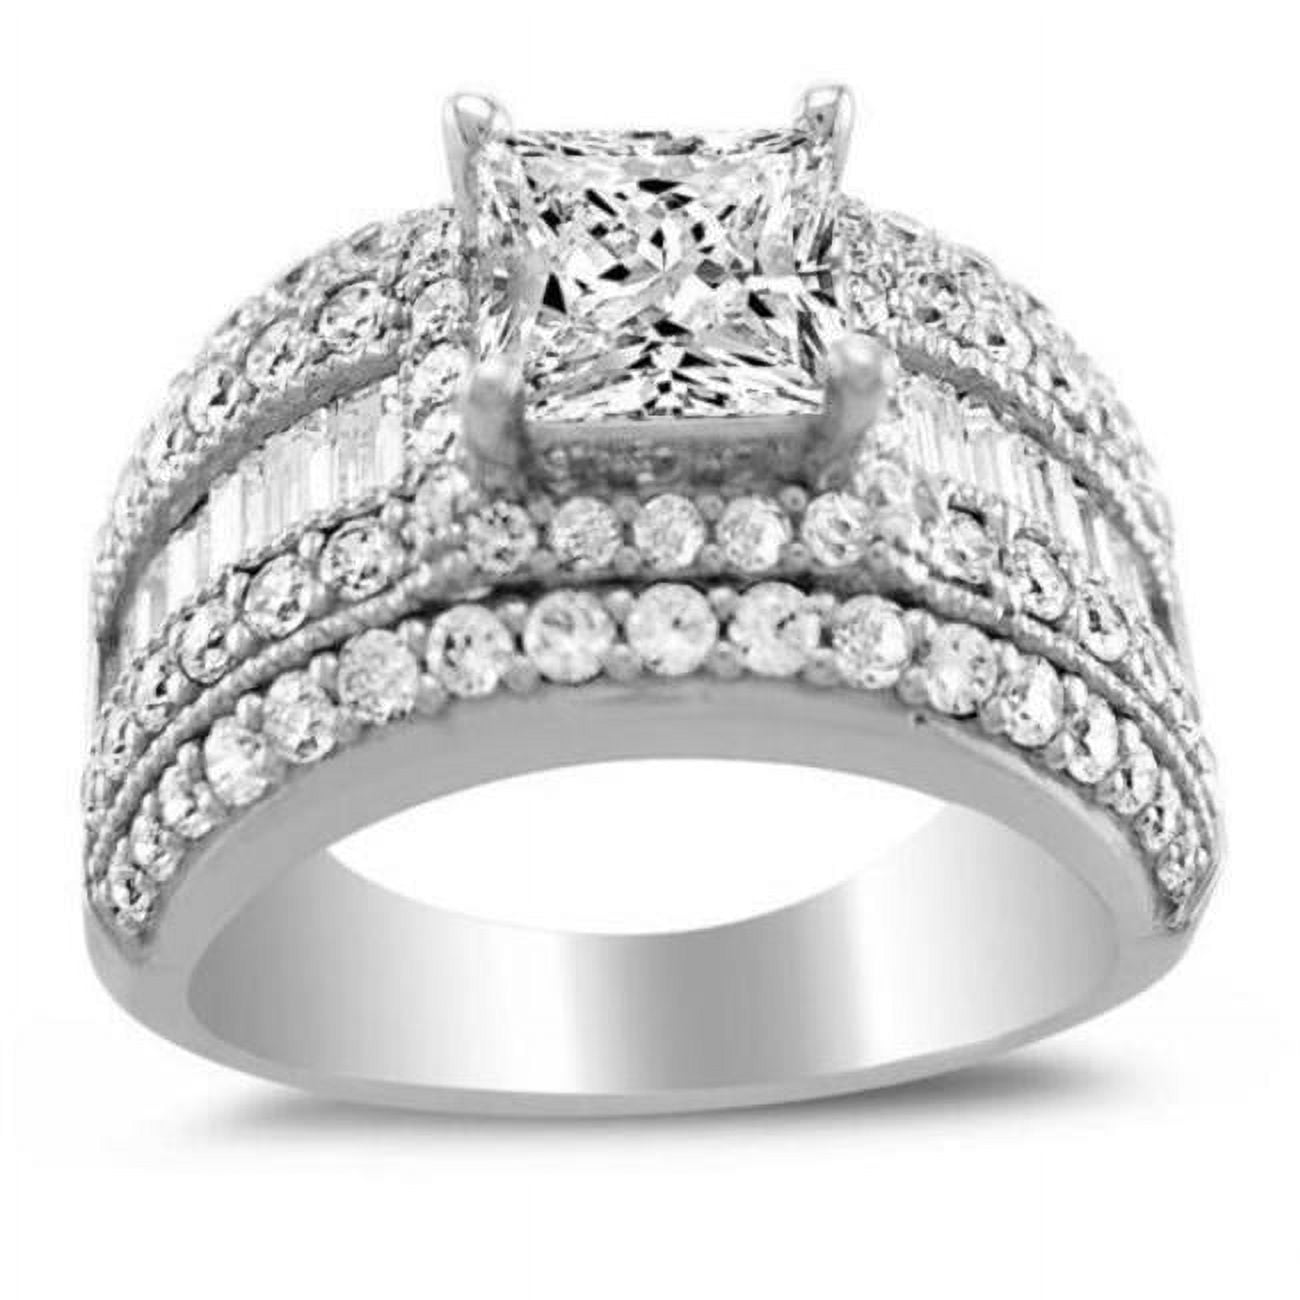 OS0065-RG-sz6.5 14K White Gold 2.5CT TGW Princess-cut Diamonette Engagement Ring, Size 6.5 -  Precious Stars, OS0065-RG_sz6.5